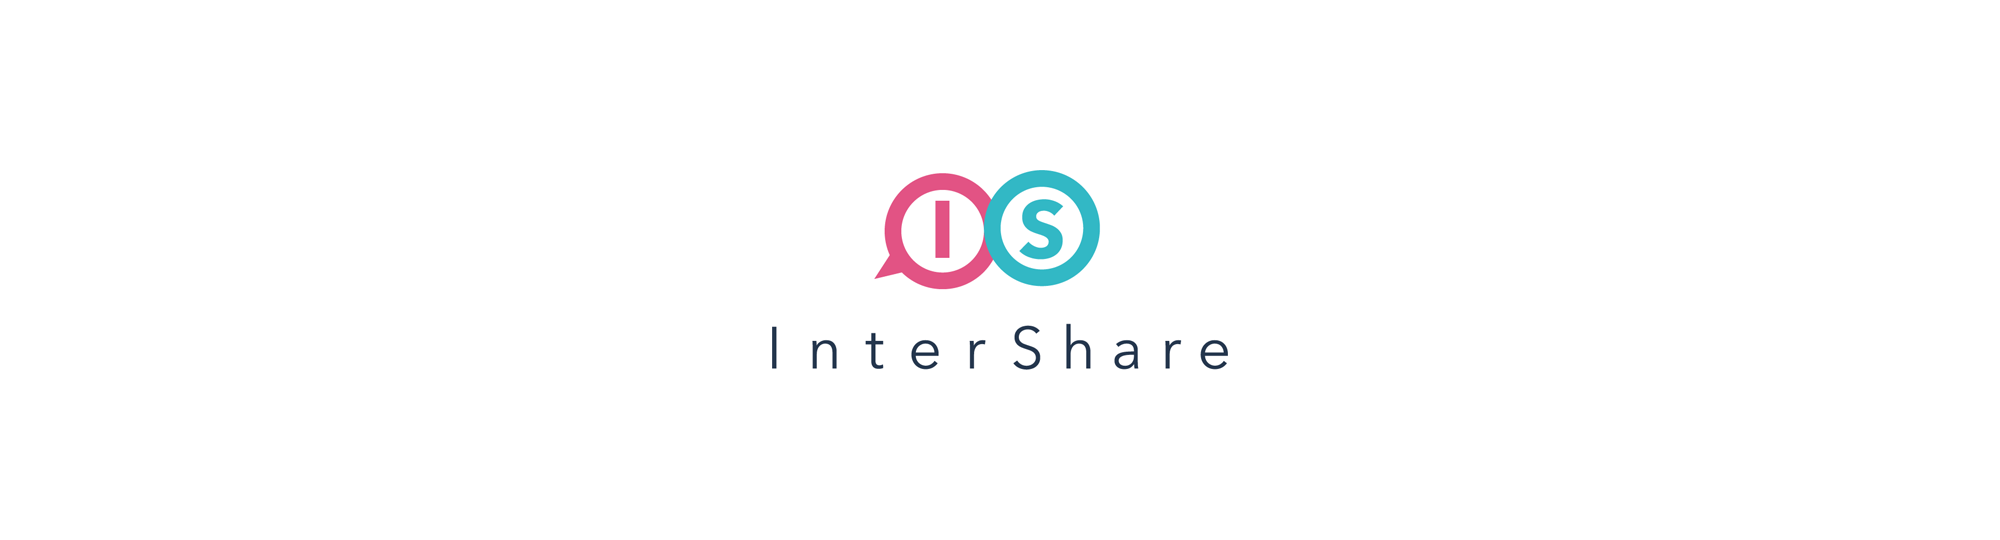 Inter Share